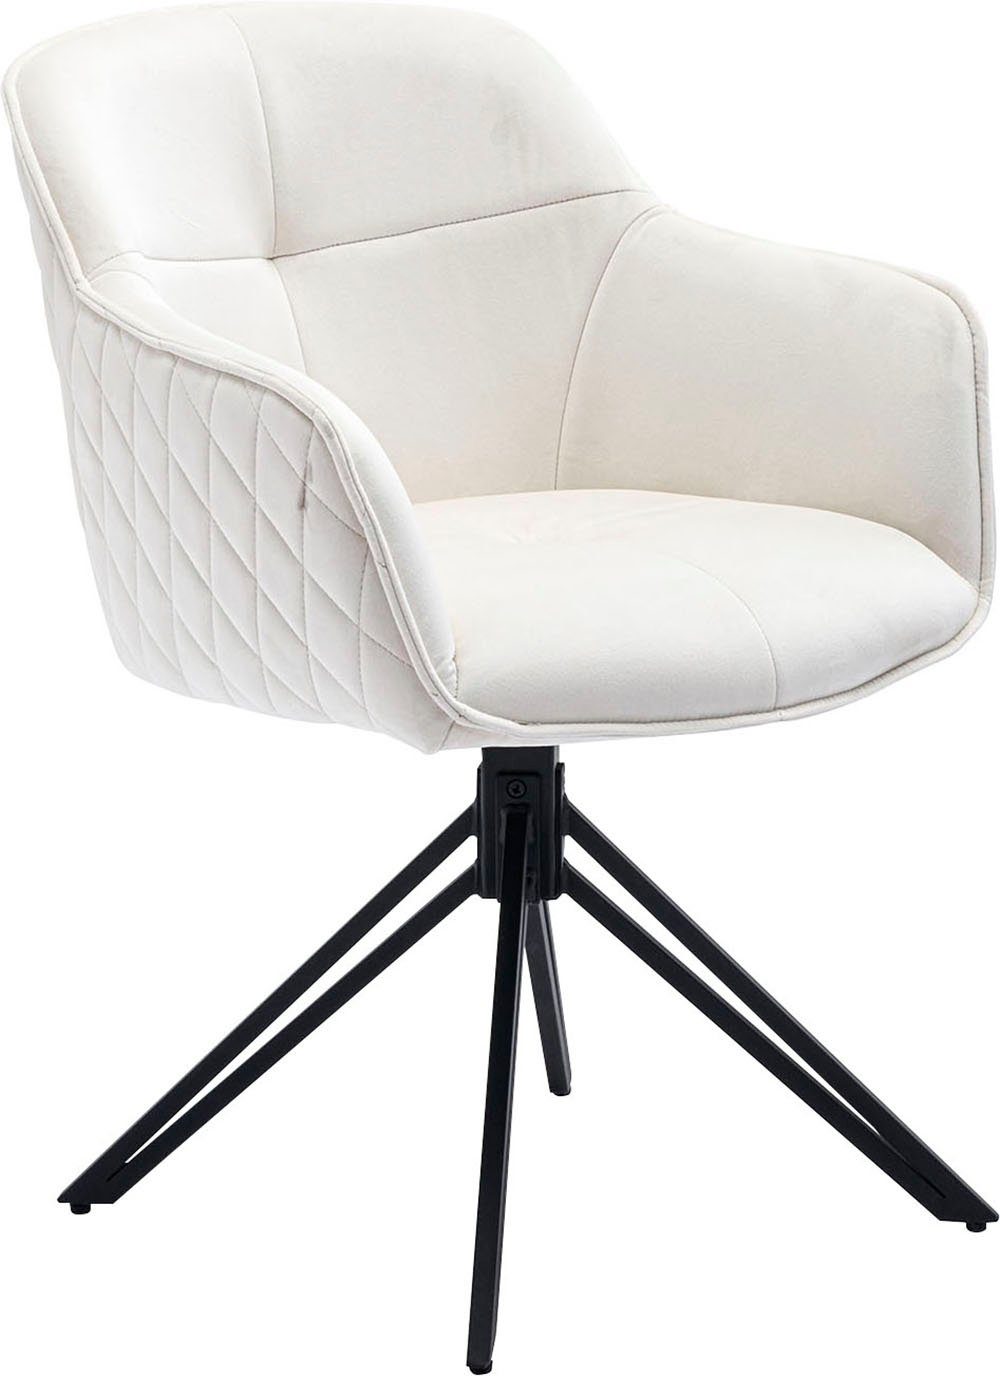 mit 360° SalesFever mit Armlehnstuhl, Samtbezug hochwertigem Eleganter Stuhl Drehfunktion,